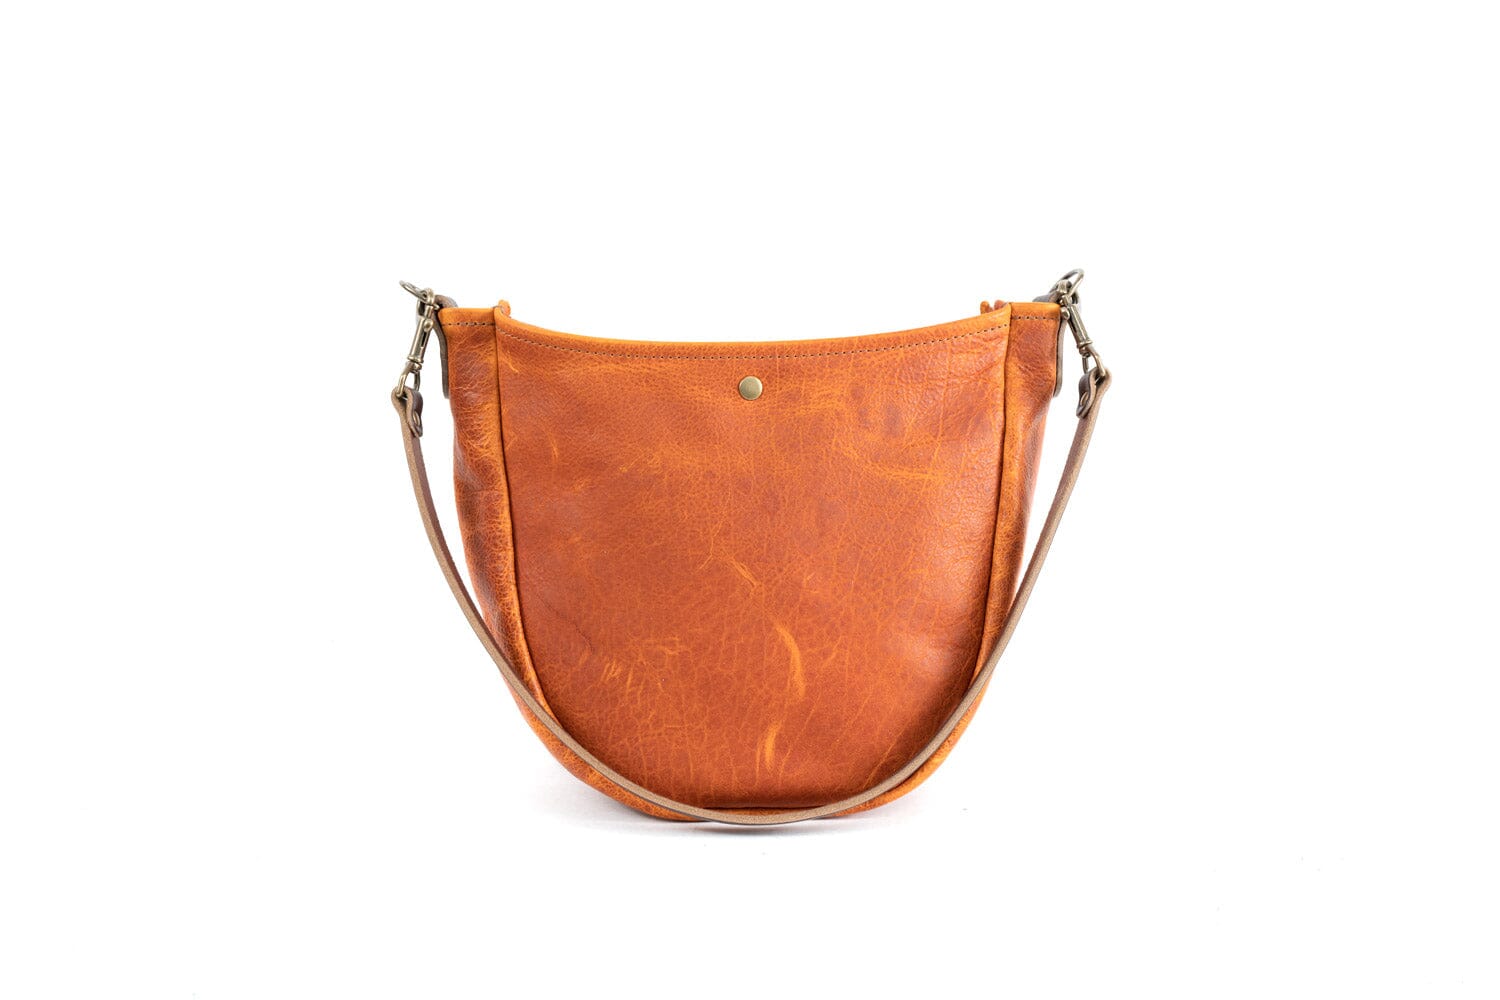 Celeste Leather Hobo Bag - Tangerine Bison